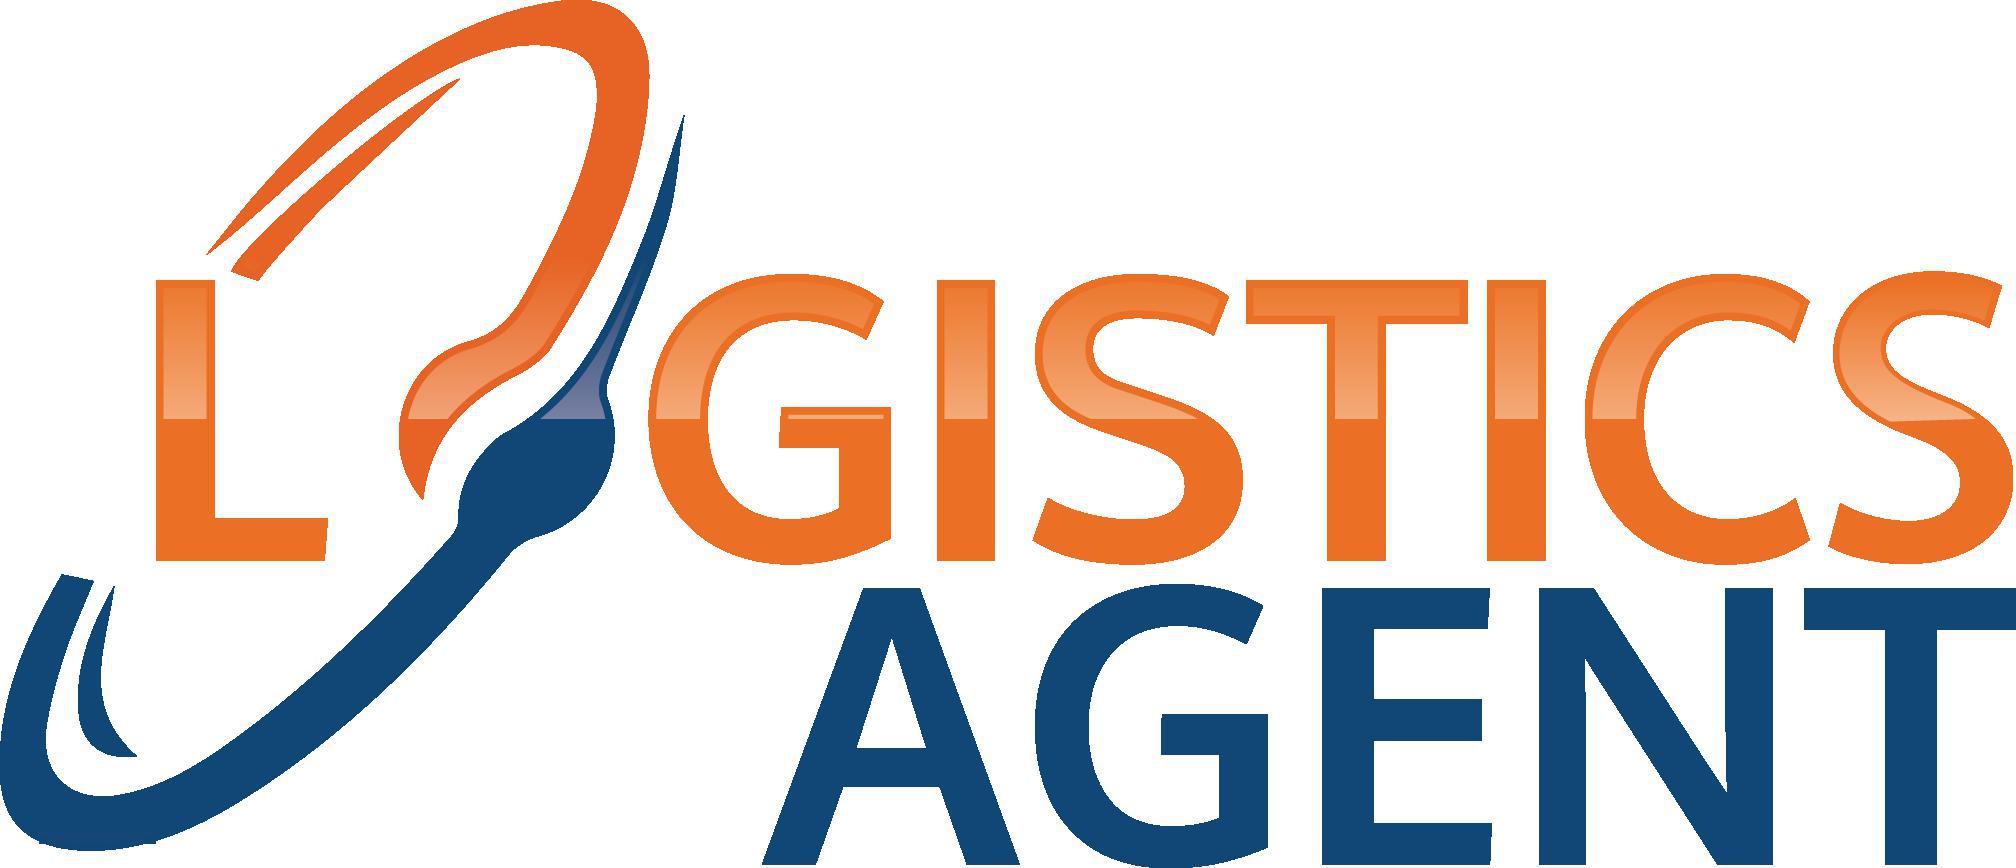 Logistics Agent company logo